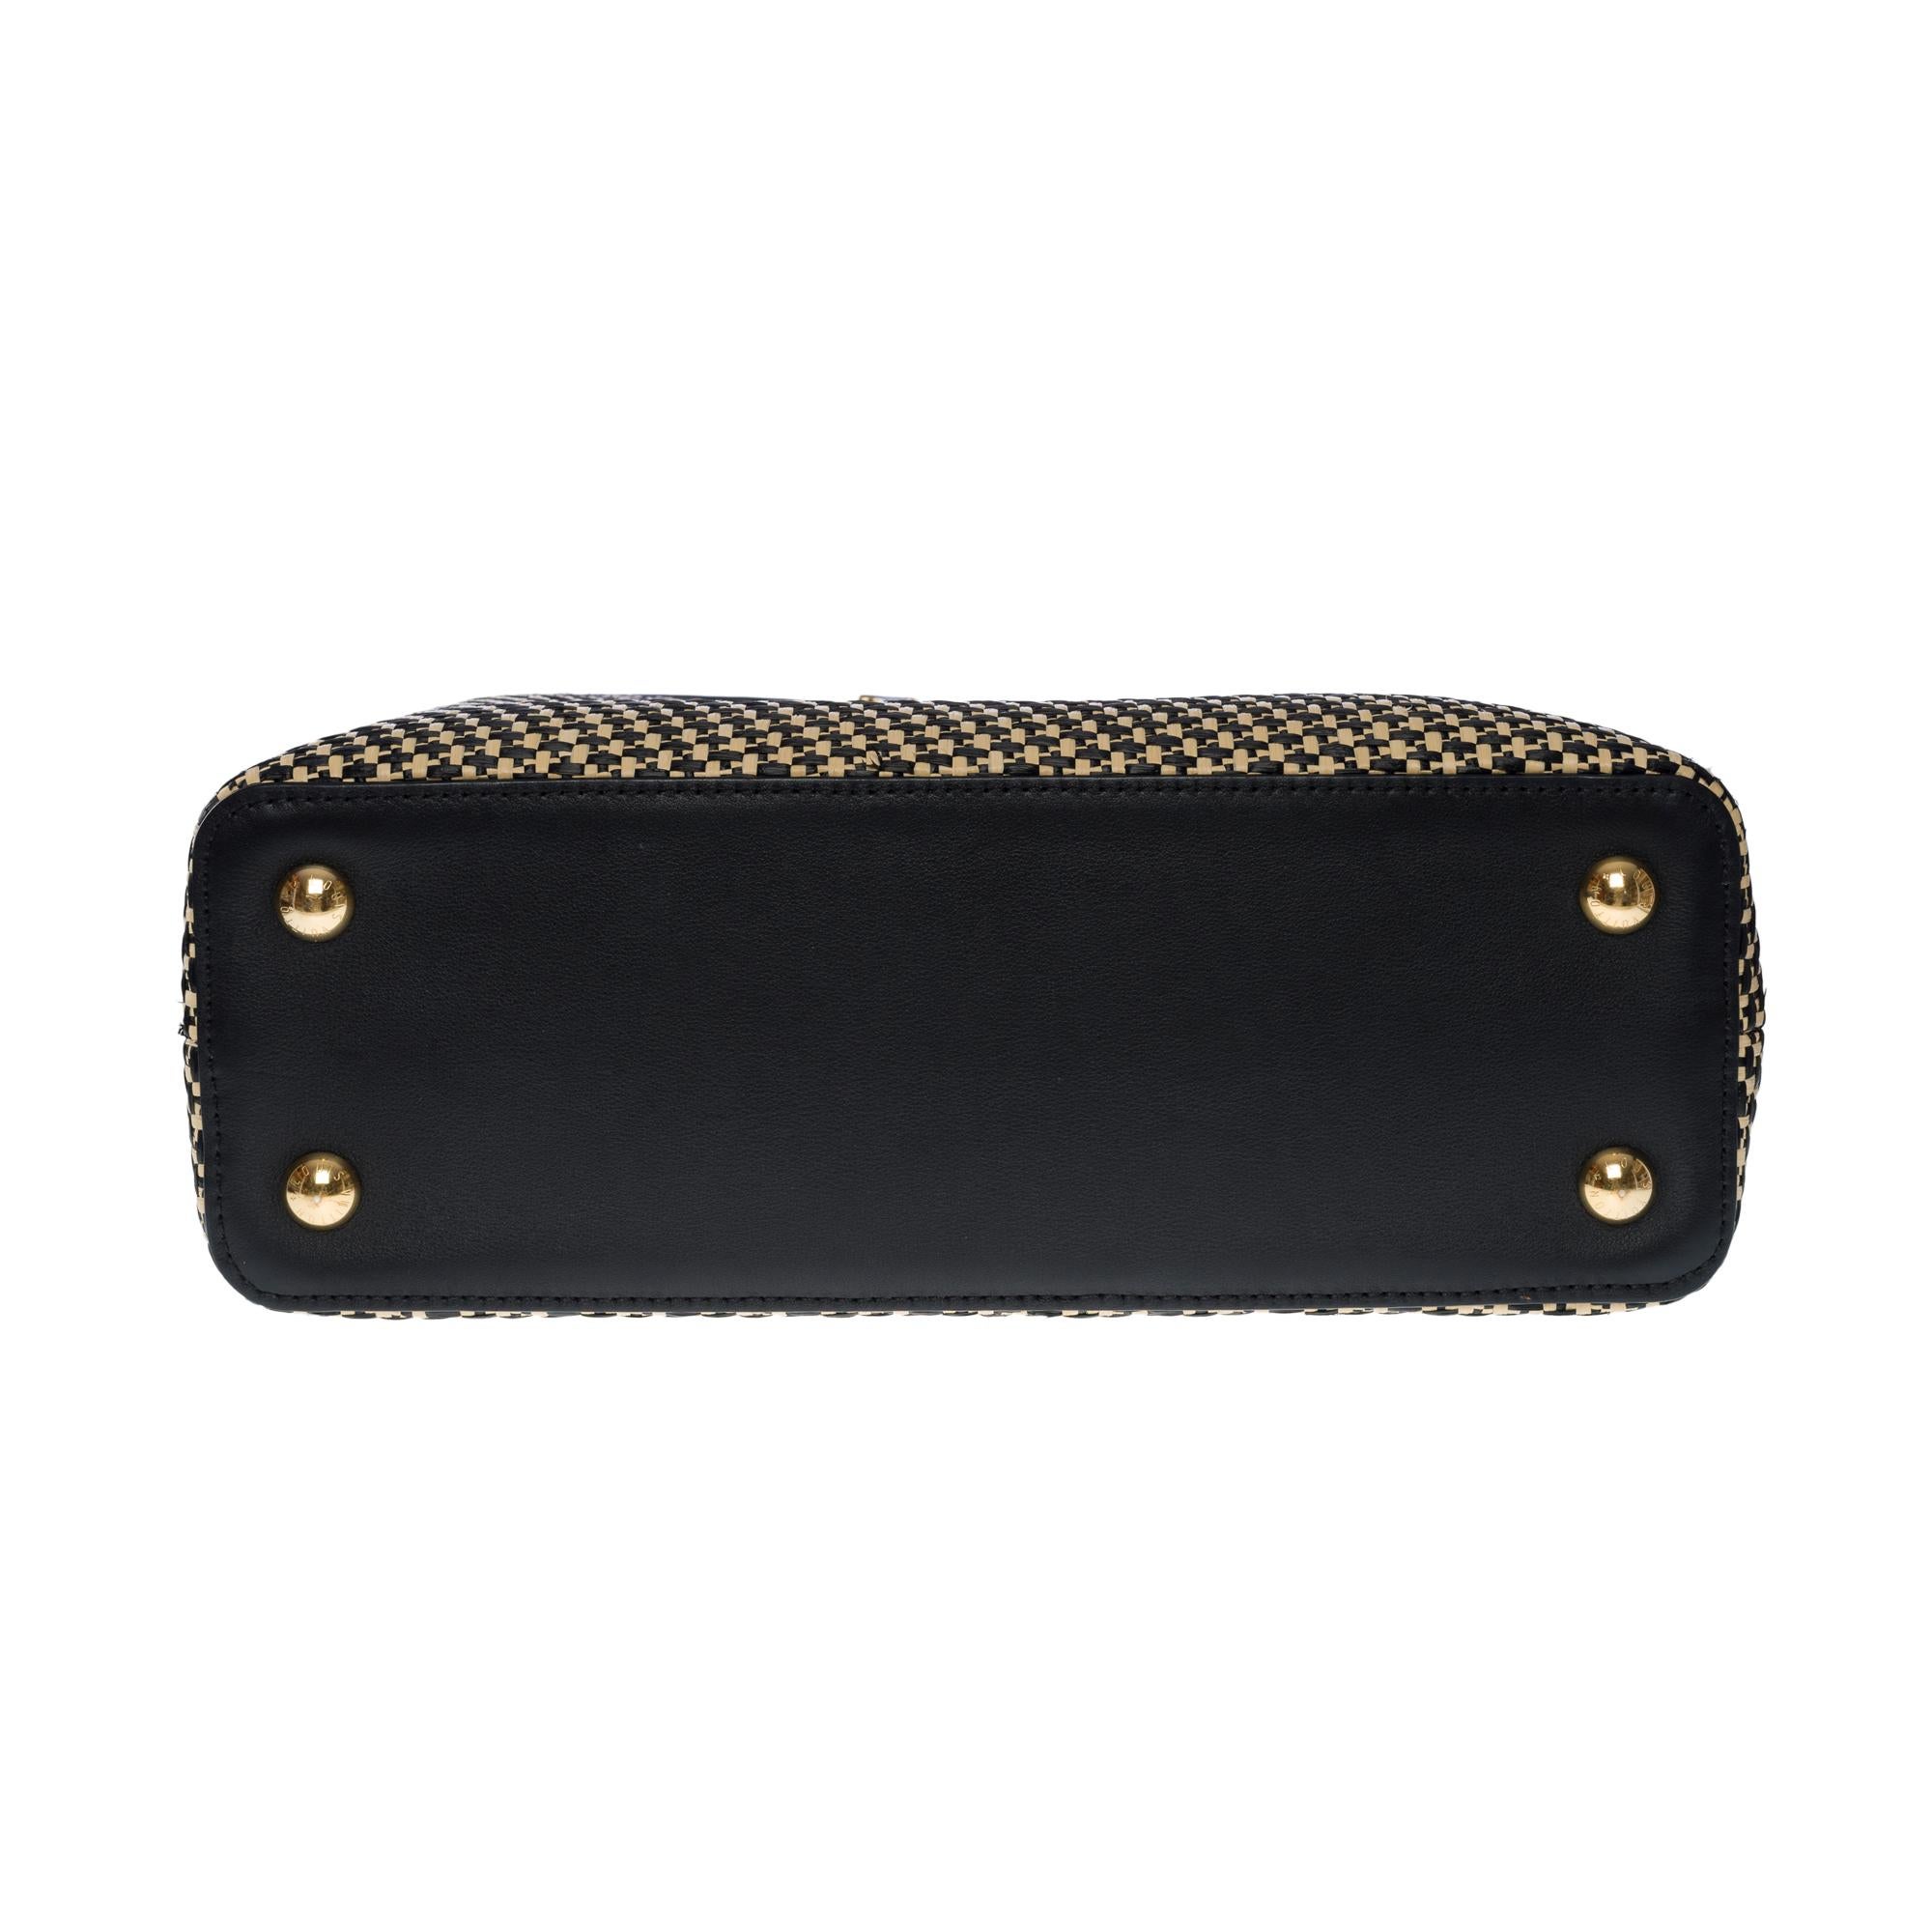 Limited Edition Louis Vuitton Capucines MM handbag strap in braided Raffia, GHW 6